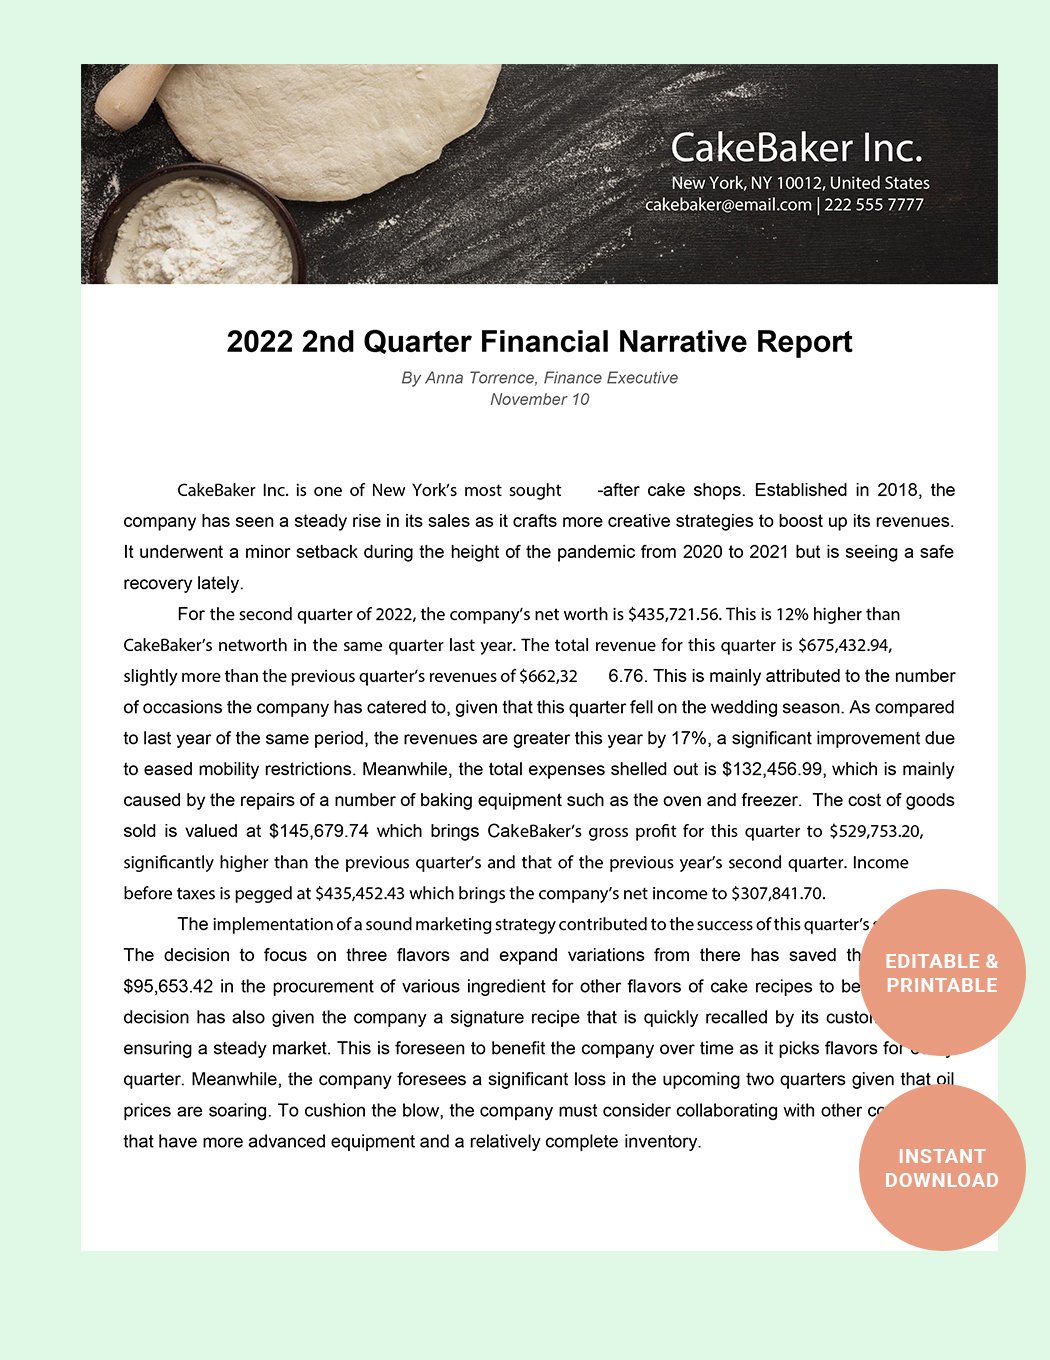 Financial Narrative Report Template